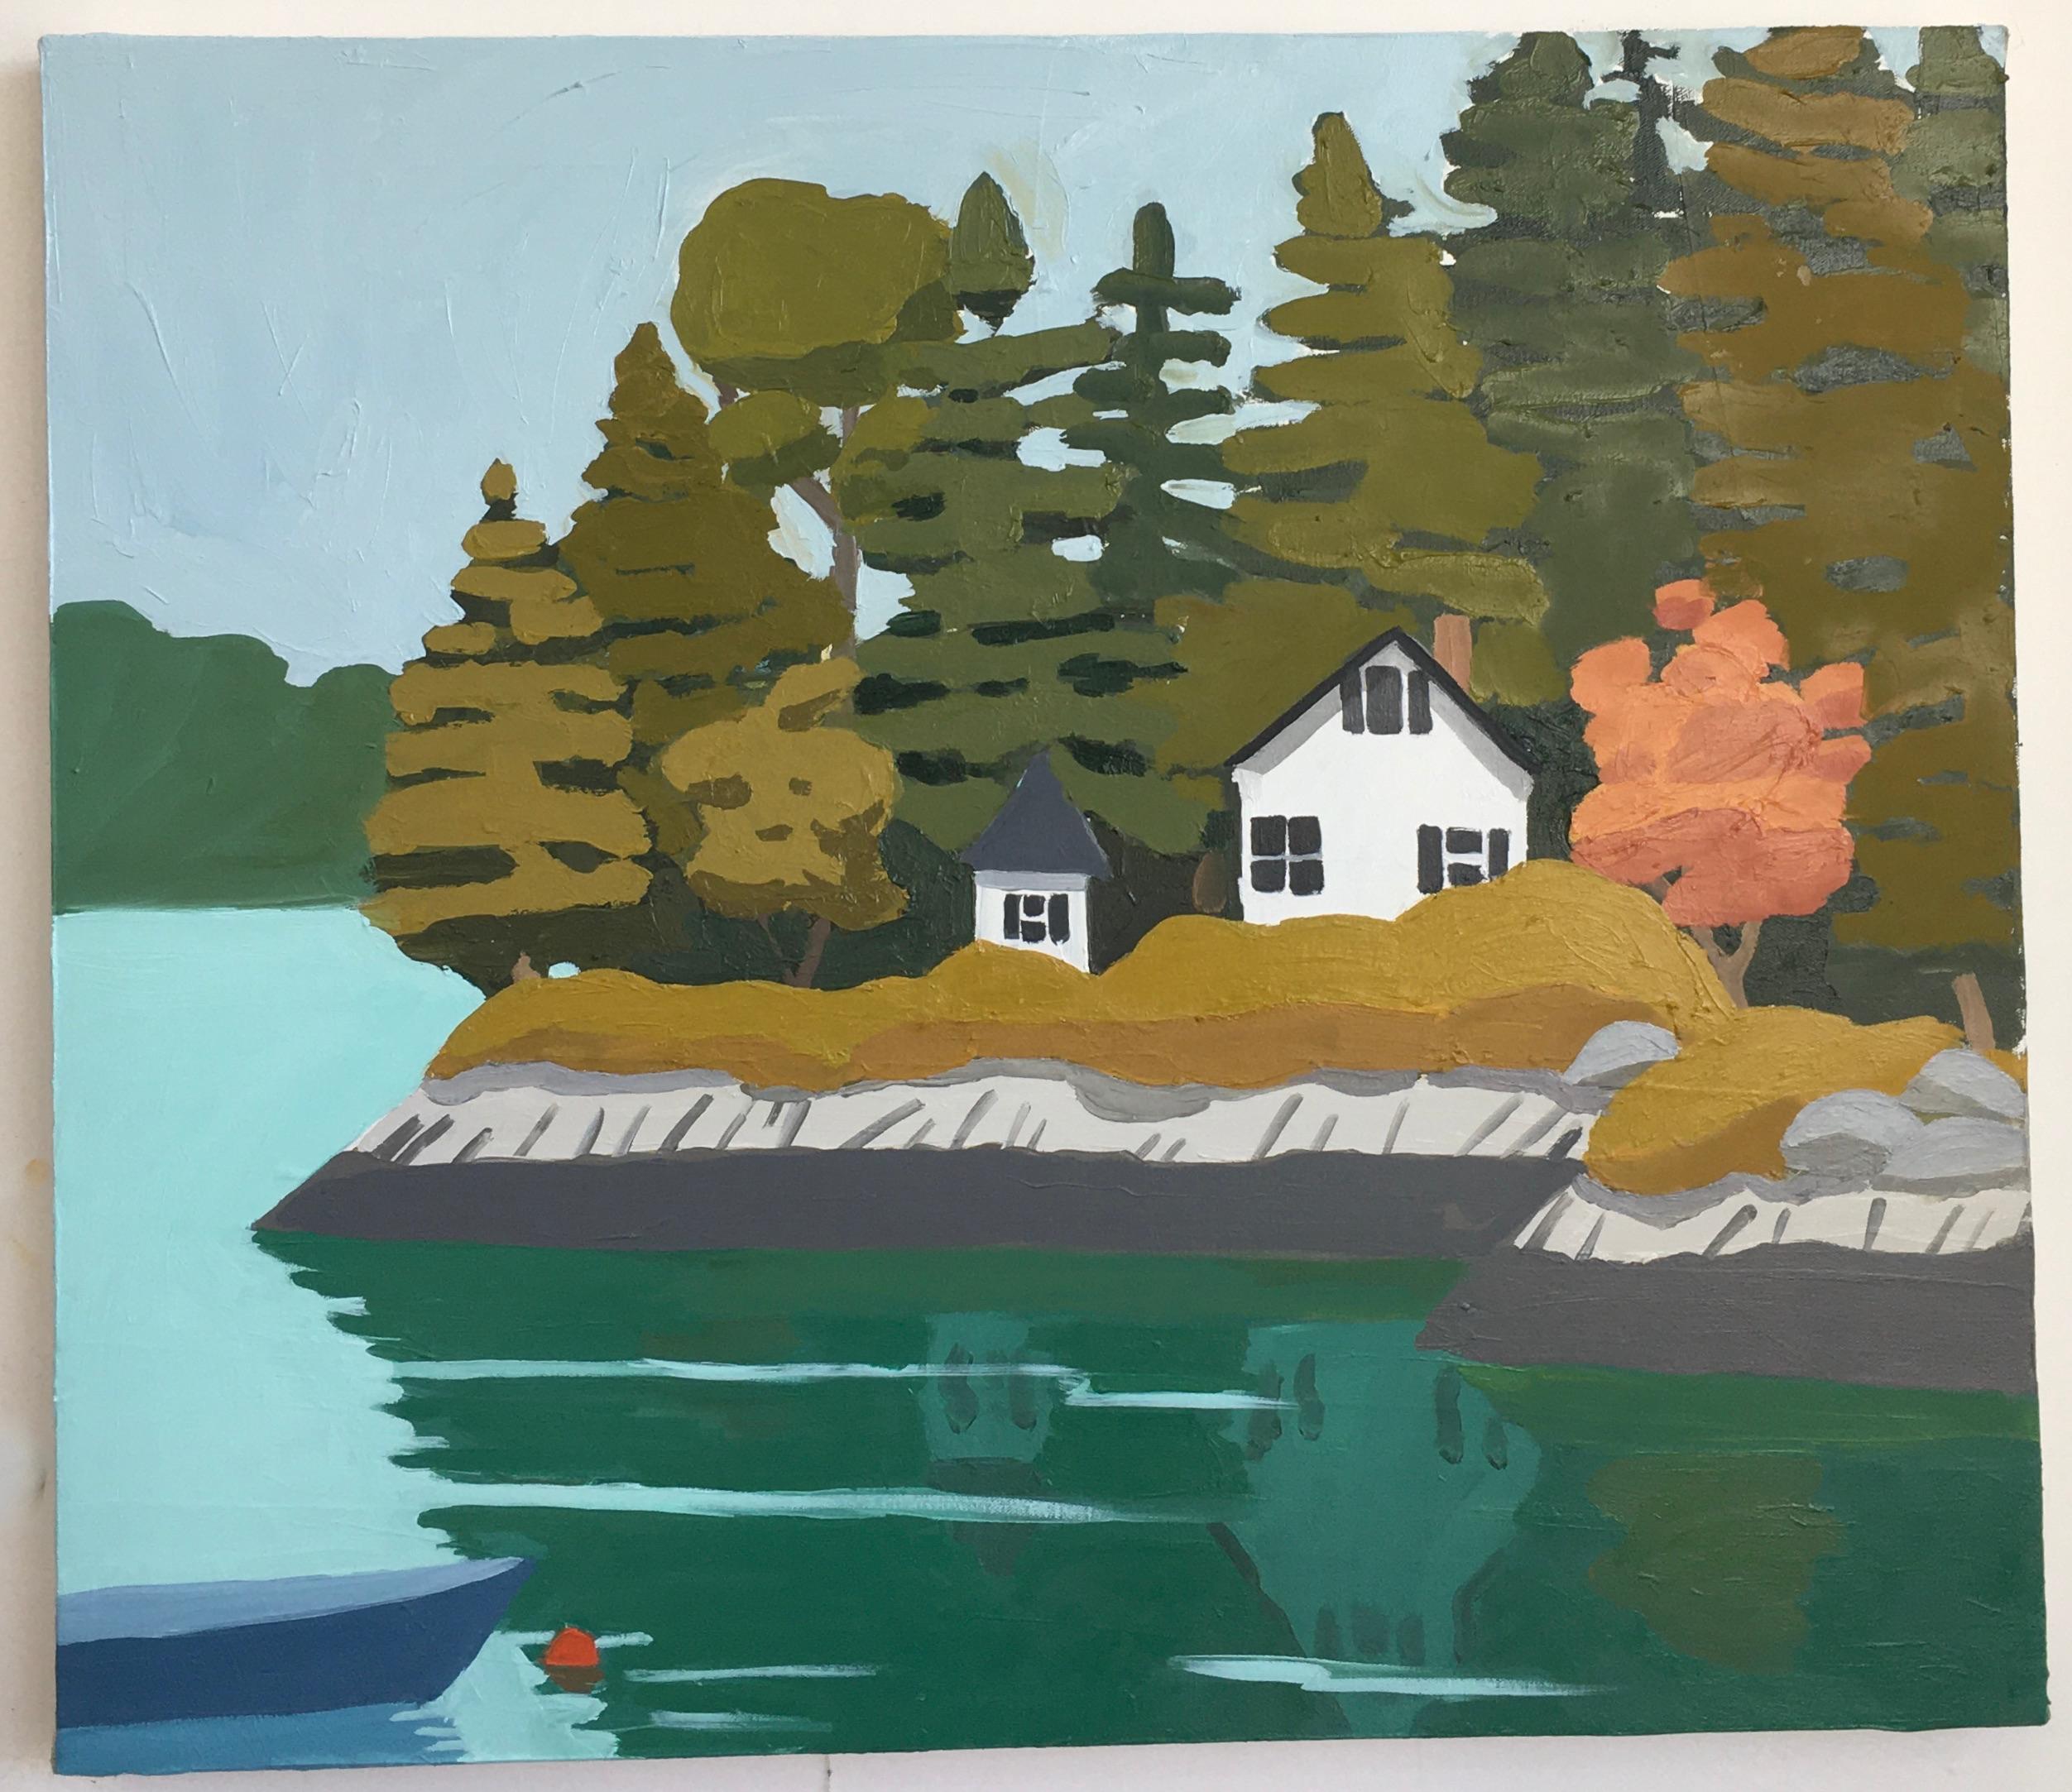 Sophie Treppendahl Landscape Painting - Sheep Island, Maine Landscape, Blue Water, Green Trees, White House on Shoreline